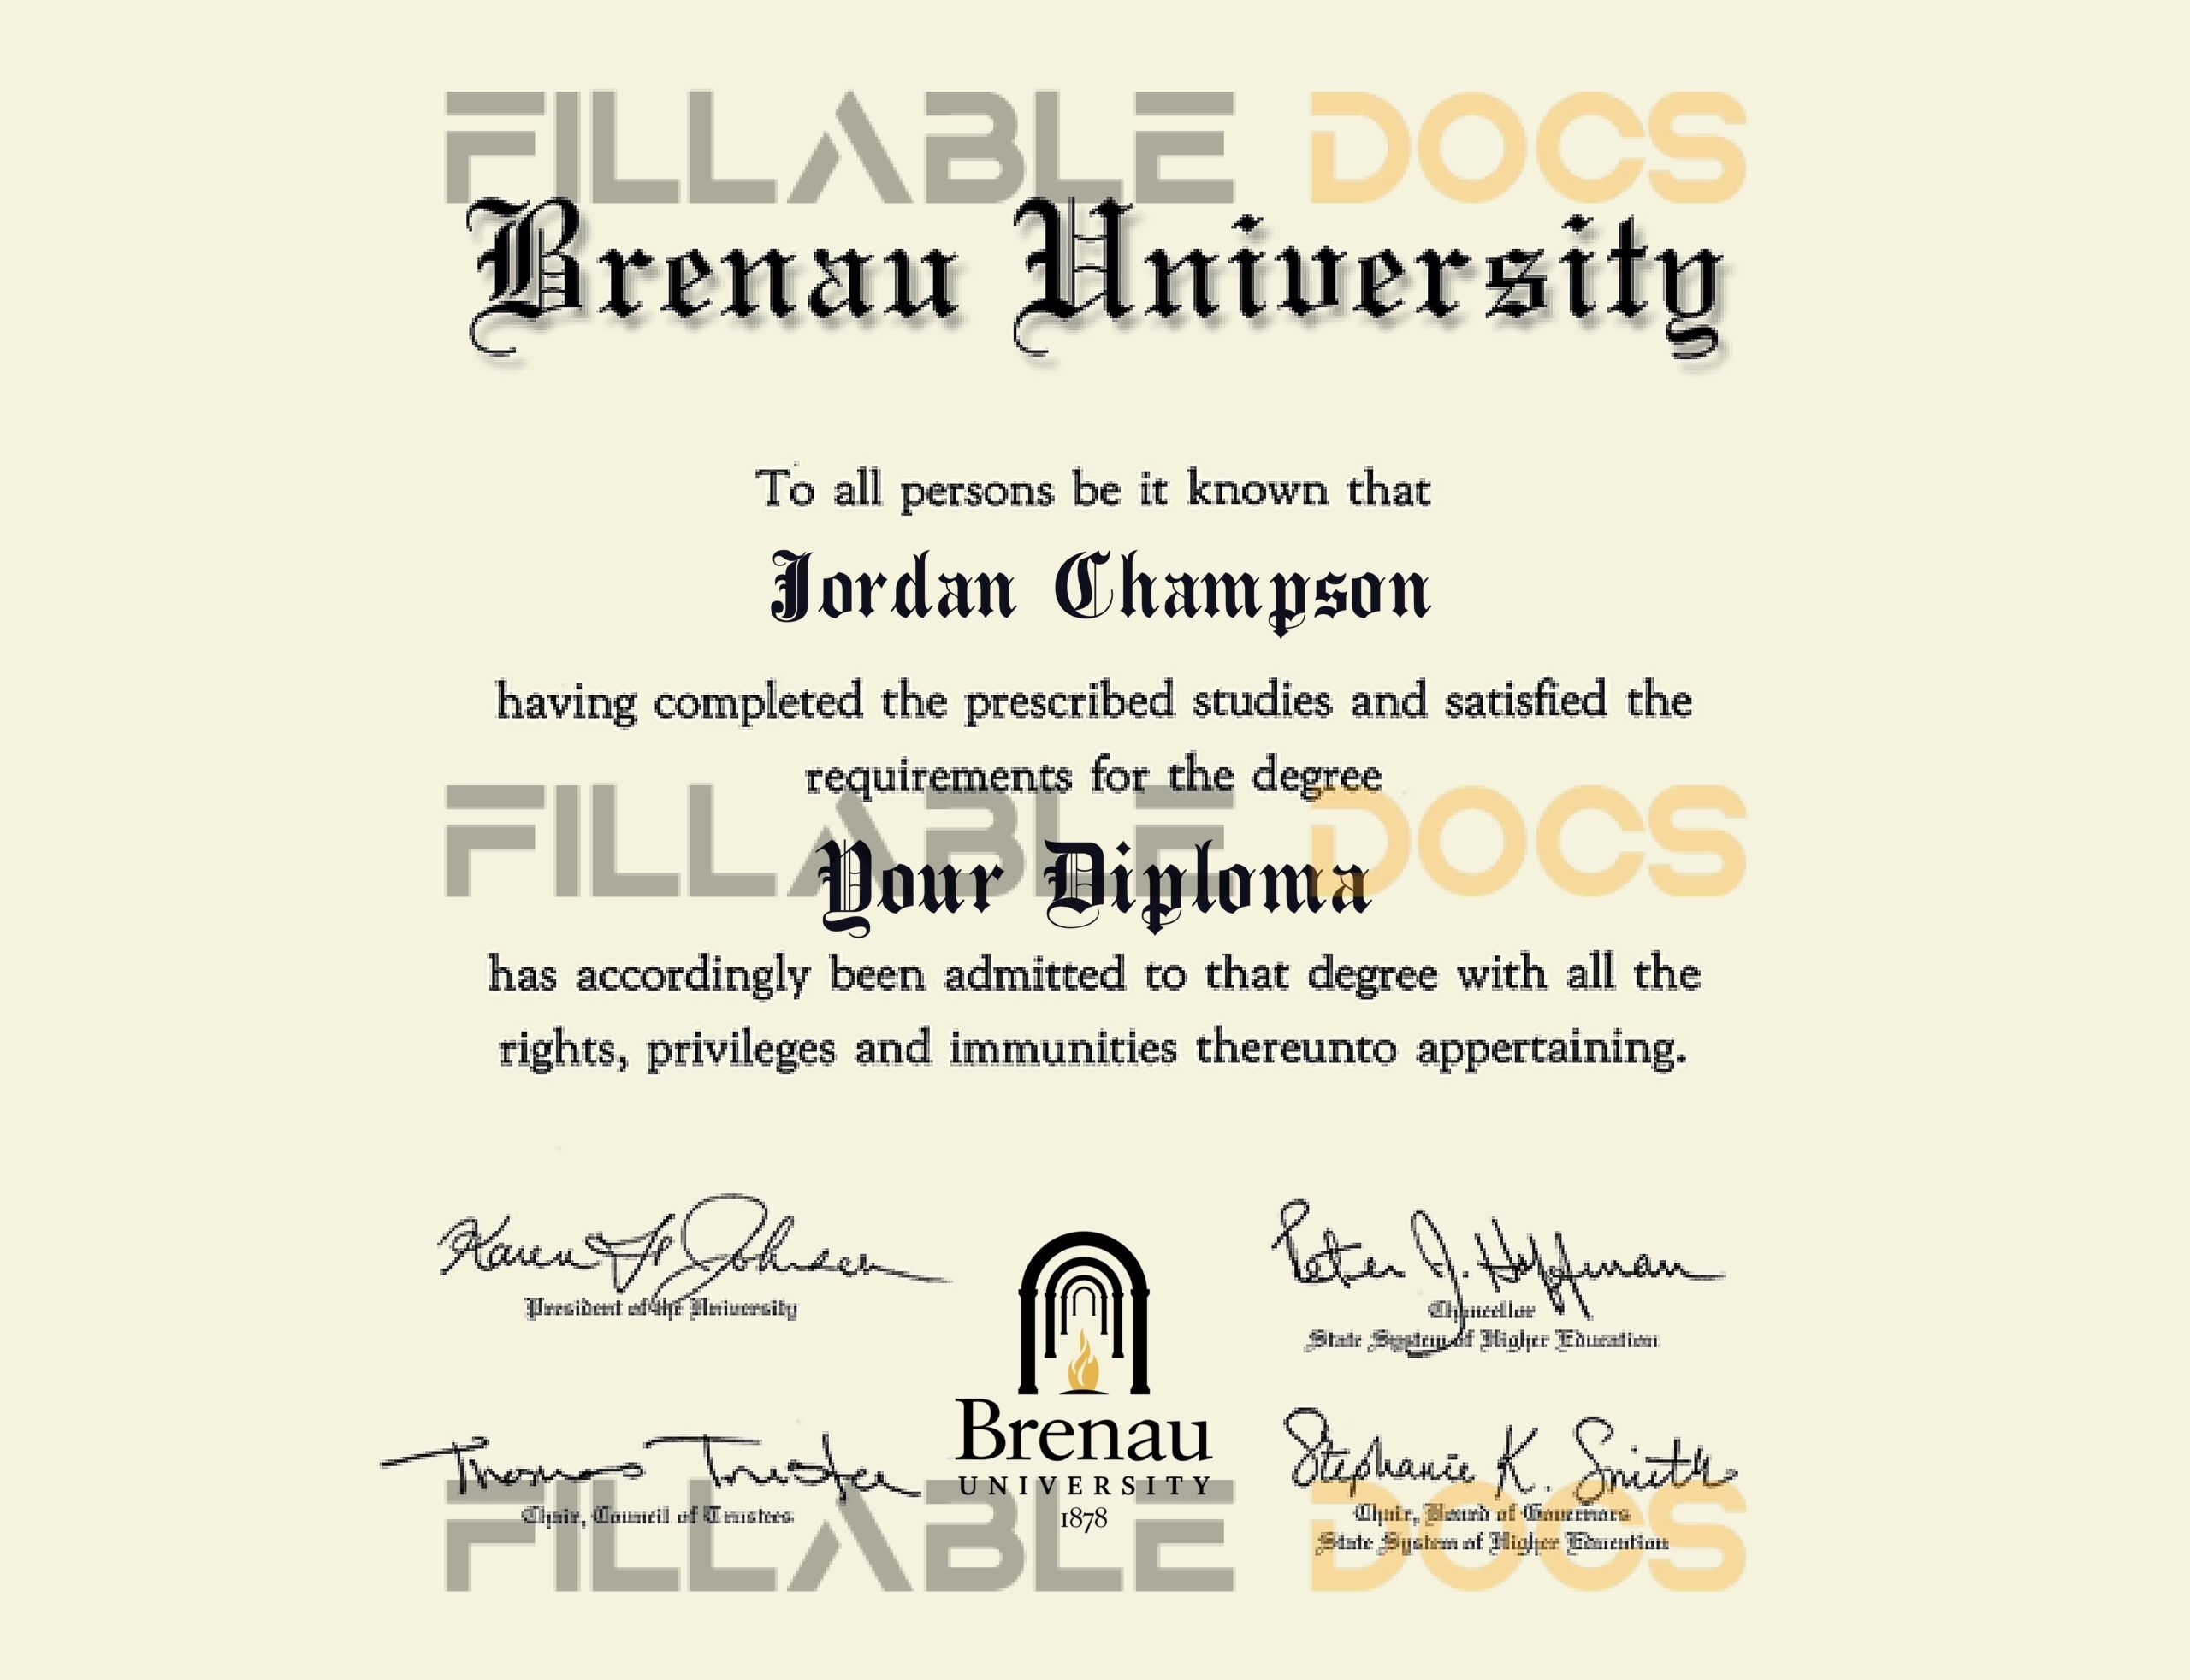 Authentic-Looking Fake Digital Diplomas from Brenau University